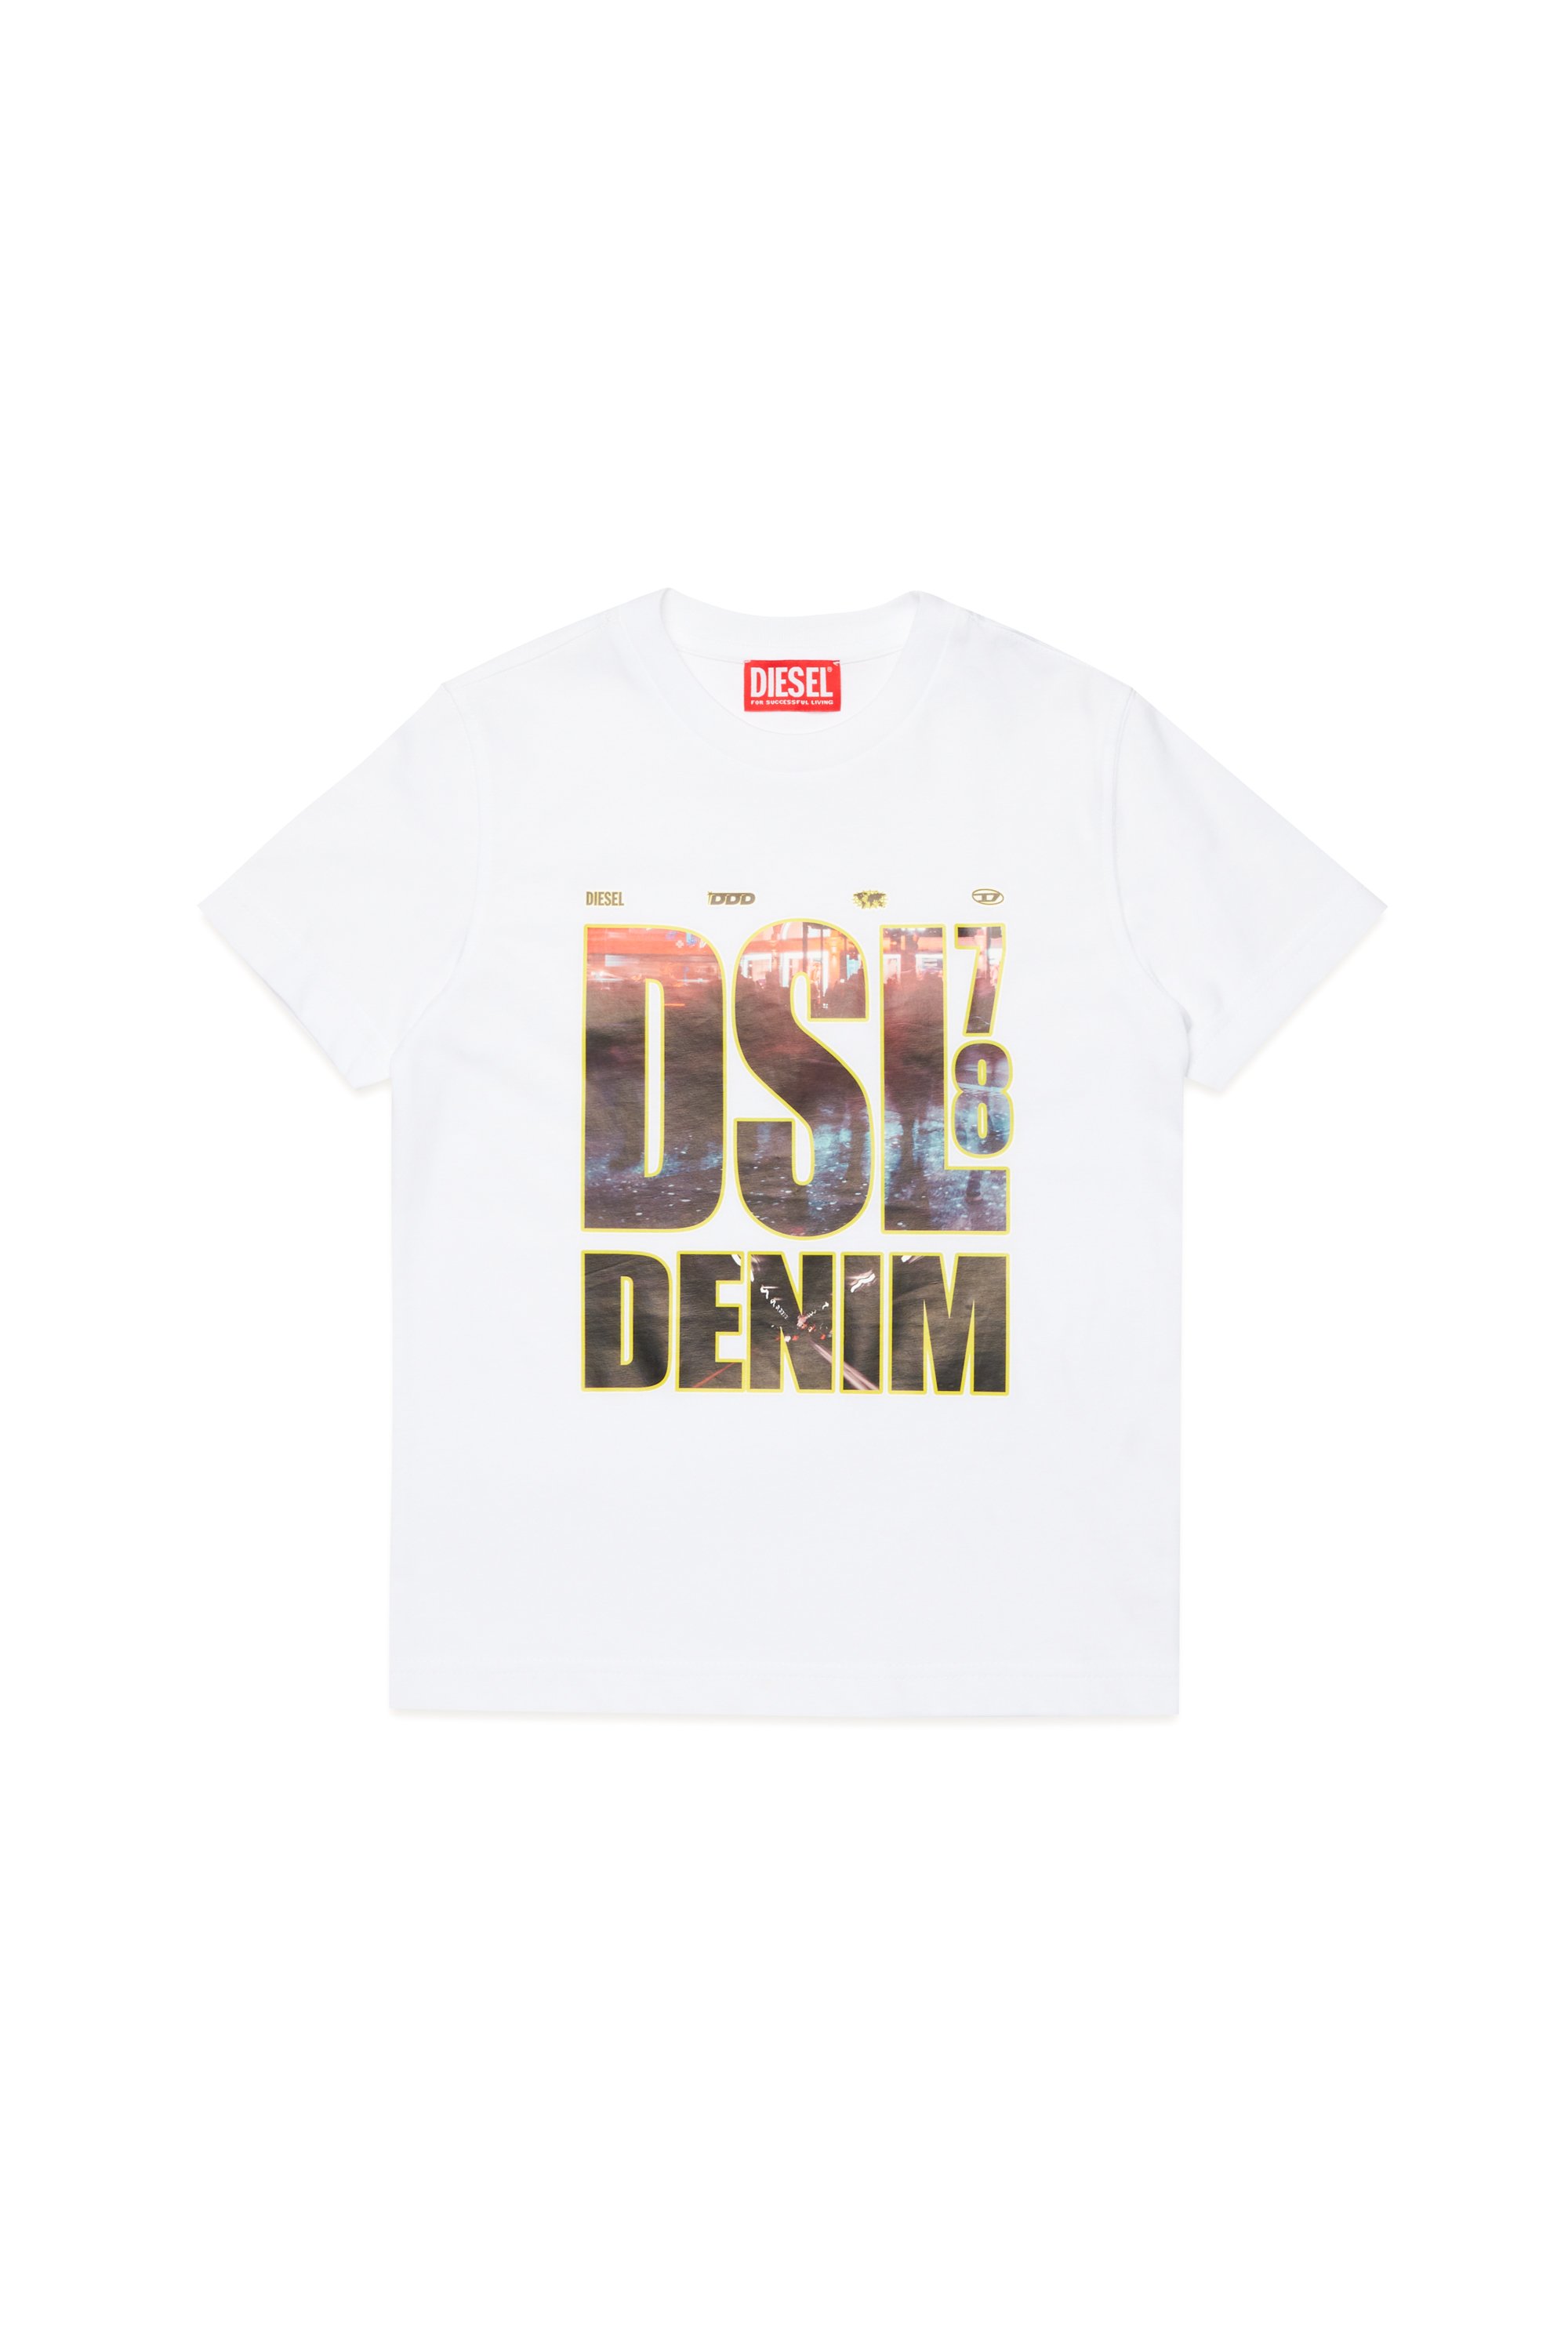 Diesel - TDIEGORL7, Man T-shirt with photo Diesel Denim 78 print in White - Image 1